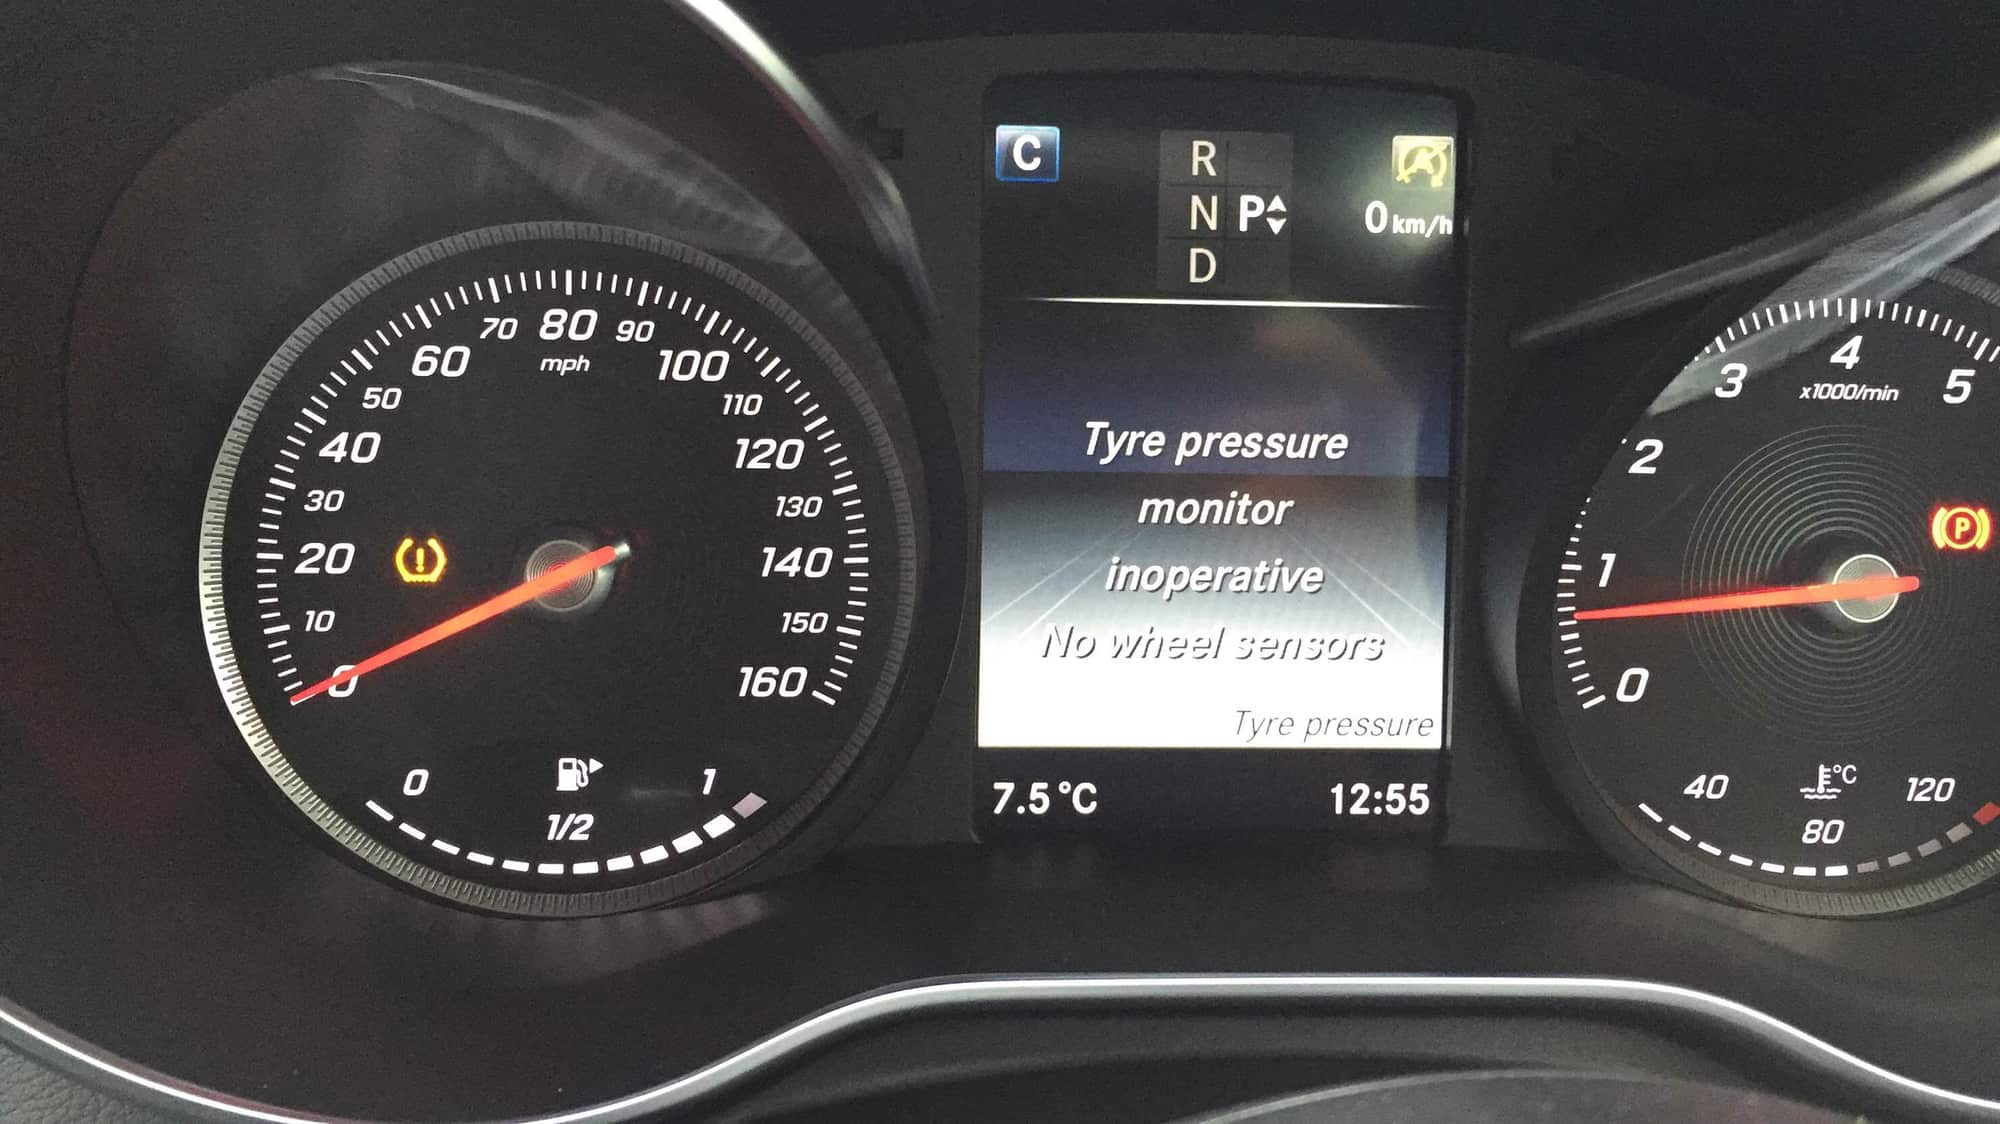 Tyre Pressure Monitor Inoperative - No Wheel Sensors - MBWorld.org Forums